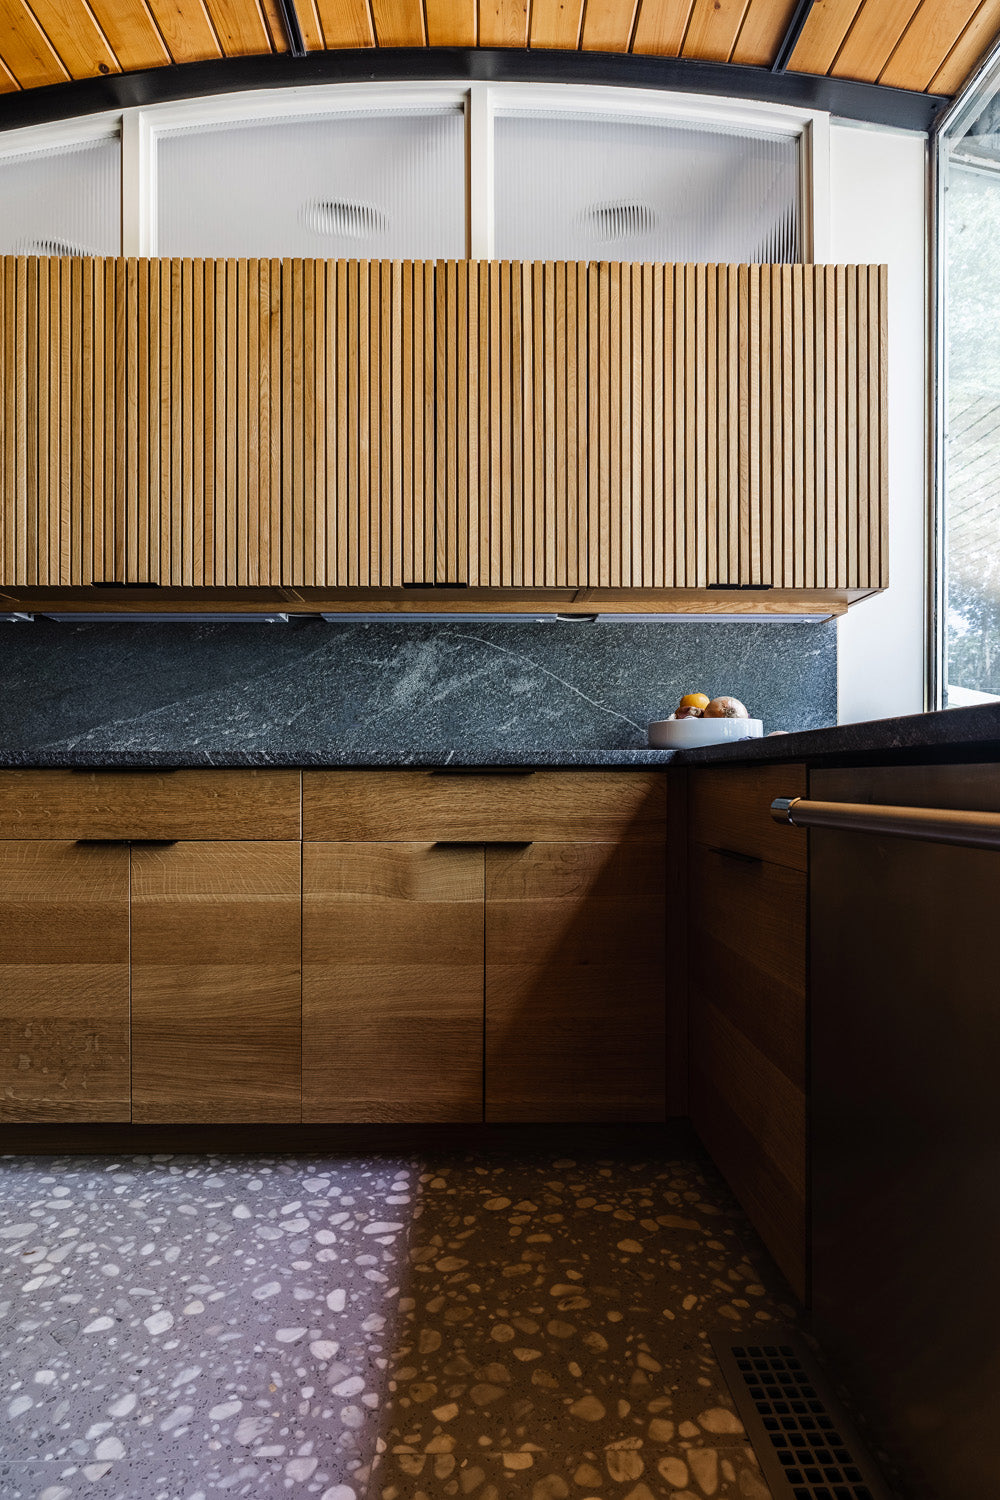 Wood kitchen cabinets by Edgework Creative